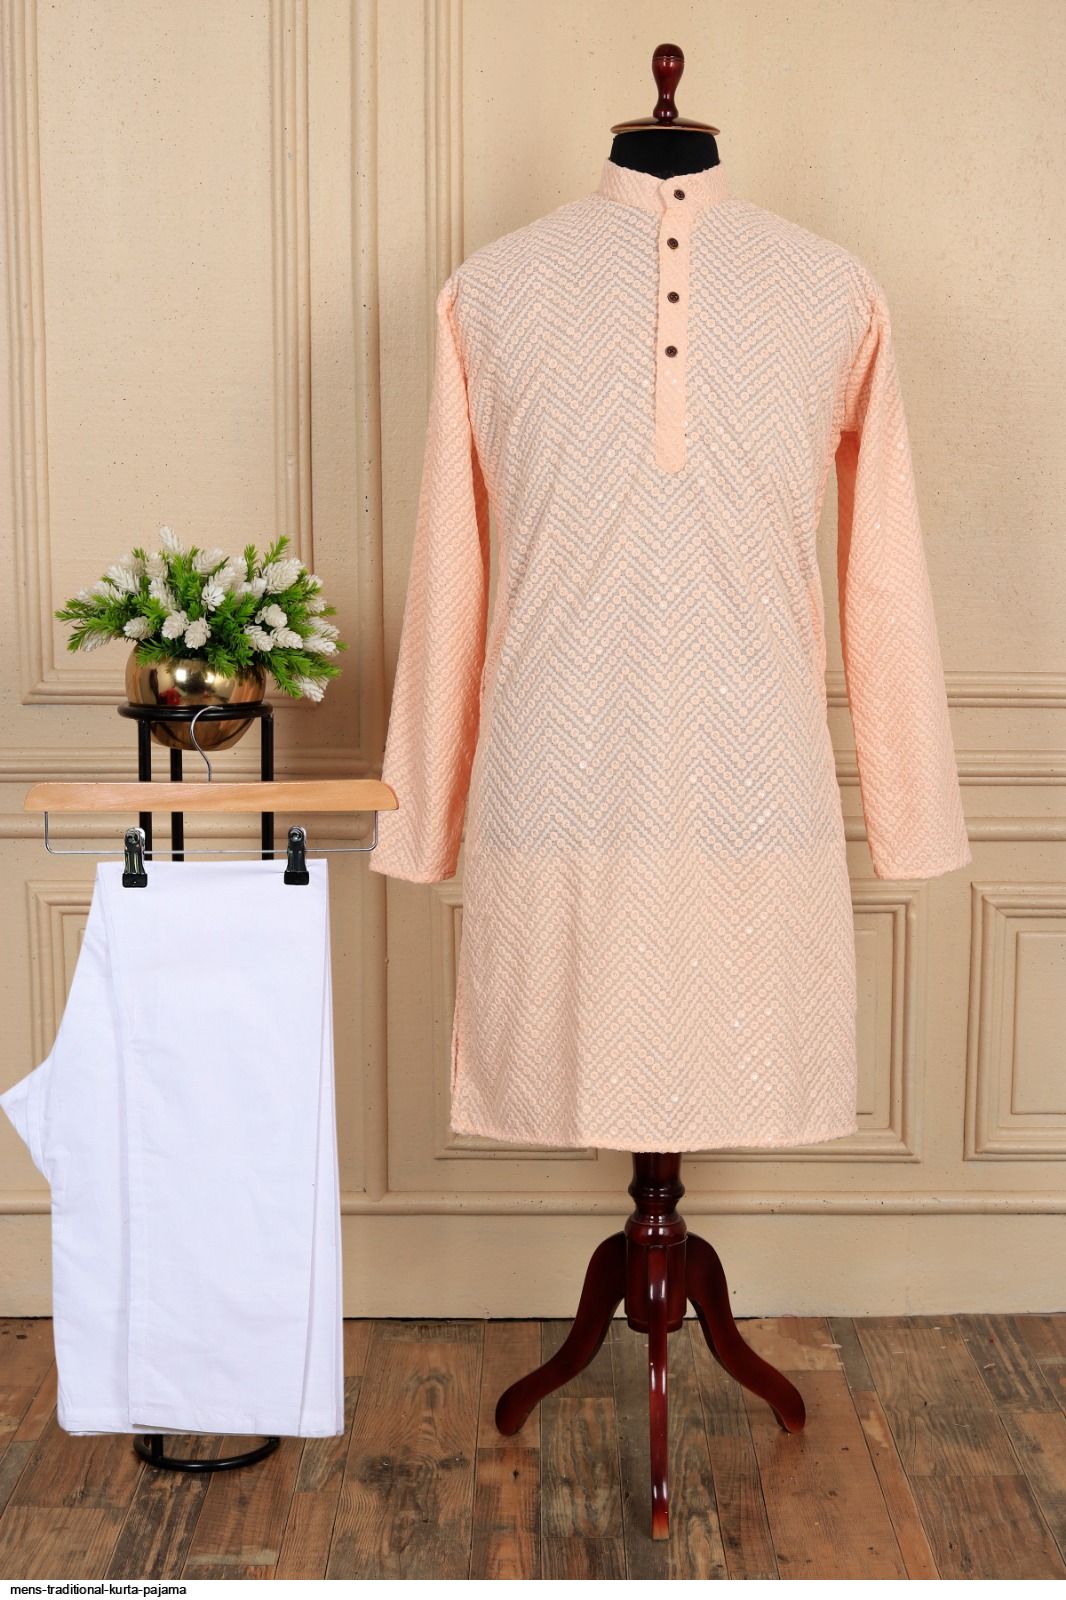 Wedding Dressing Ideas for Men||Gents kurta Designs for Wedding | Gents  kurta design, Mens kurta designs, Gents kurta